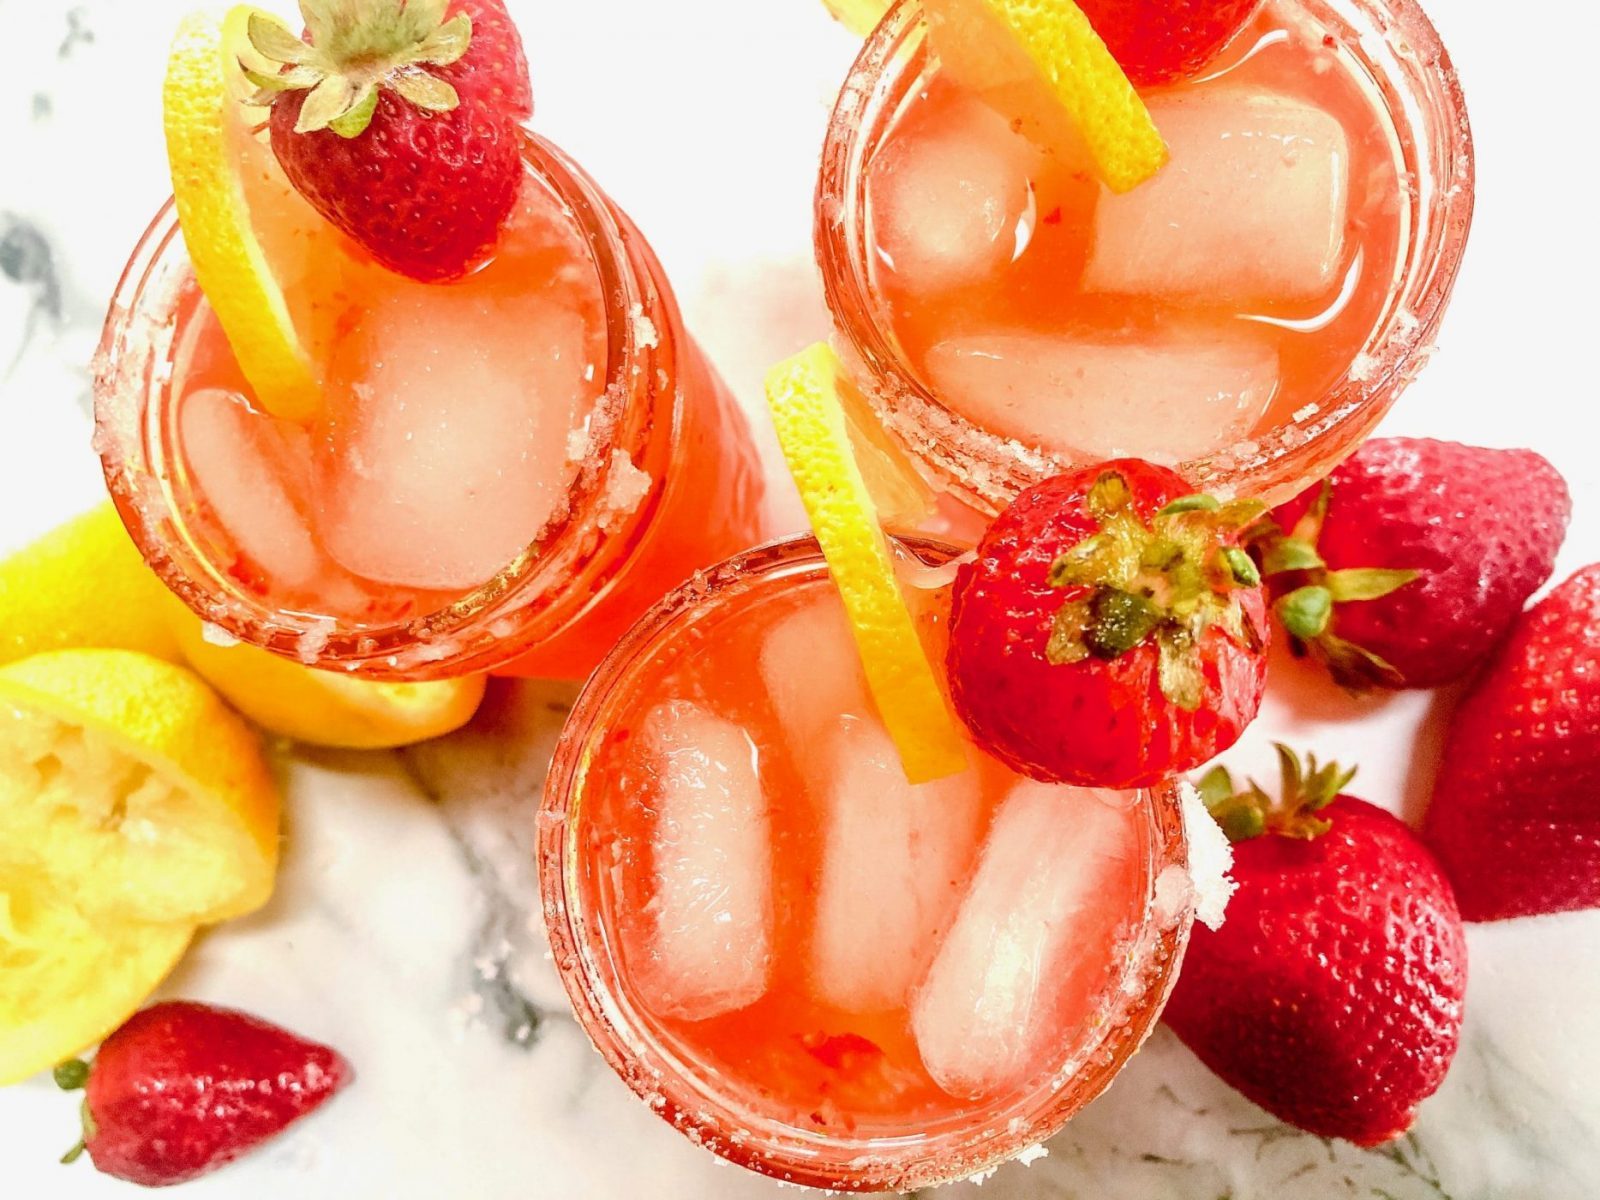 Simple Strawberry Lemonade Recipe